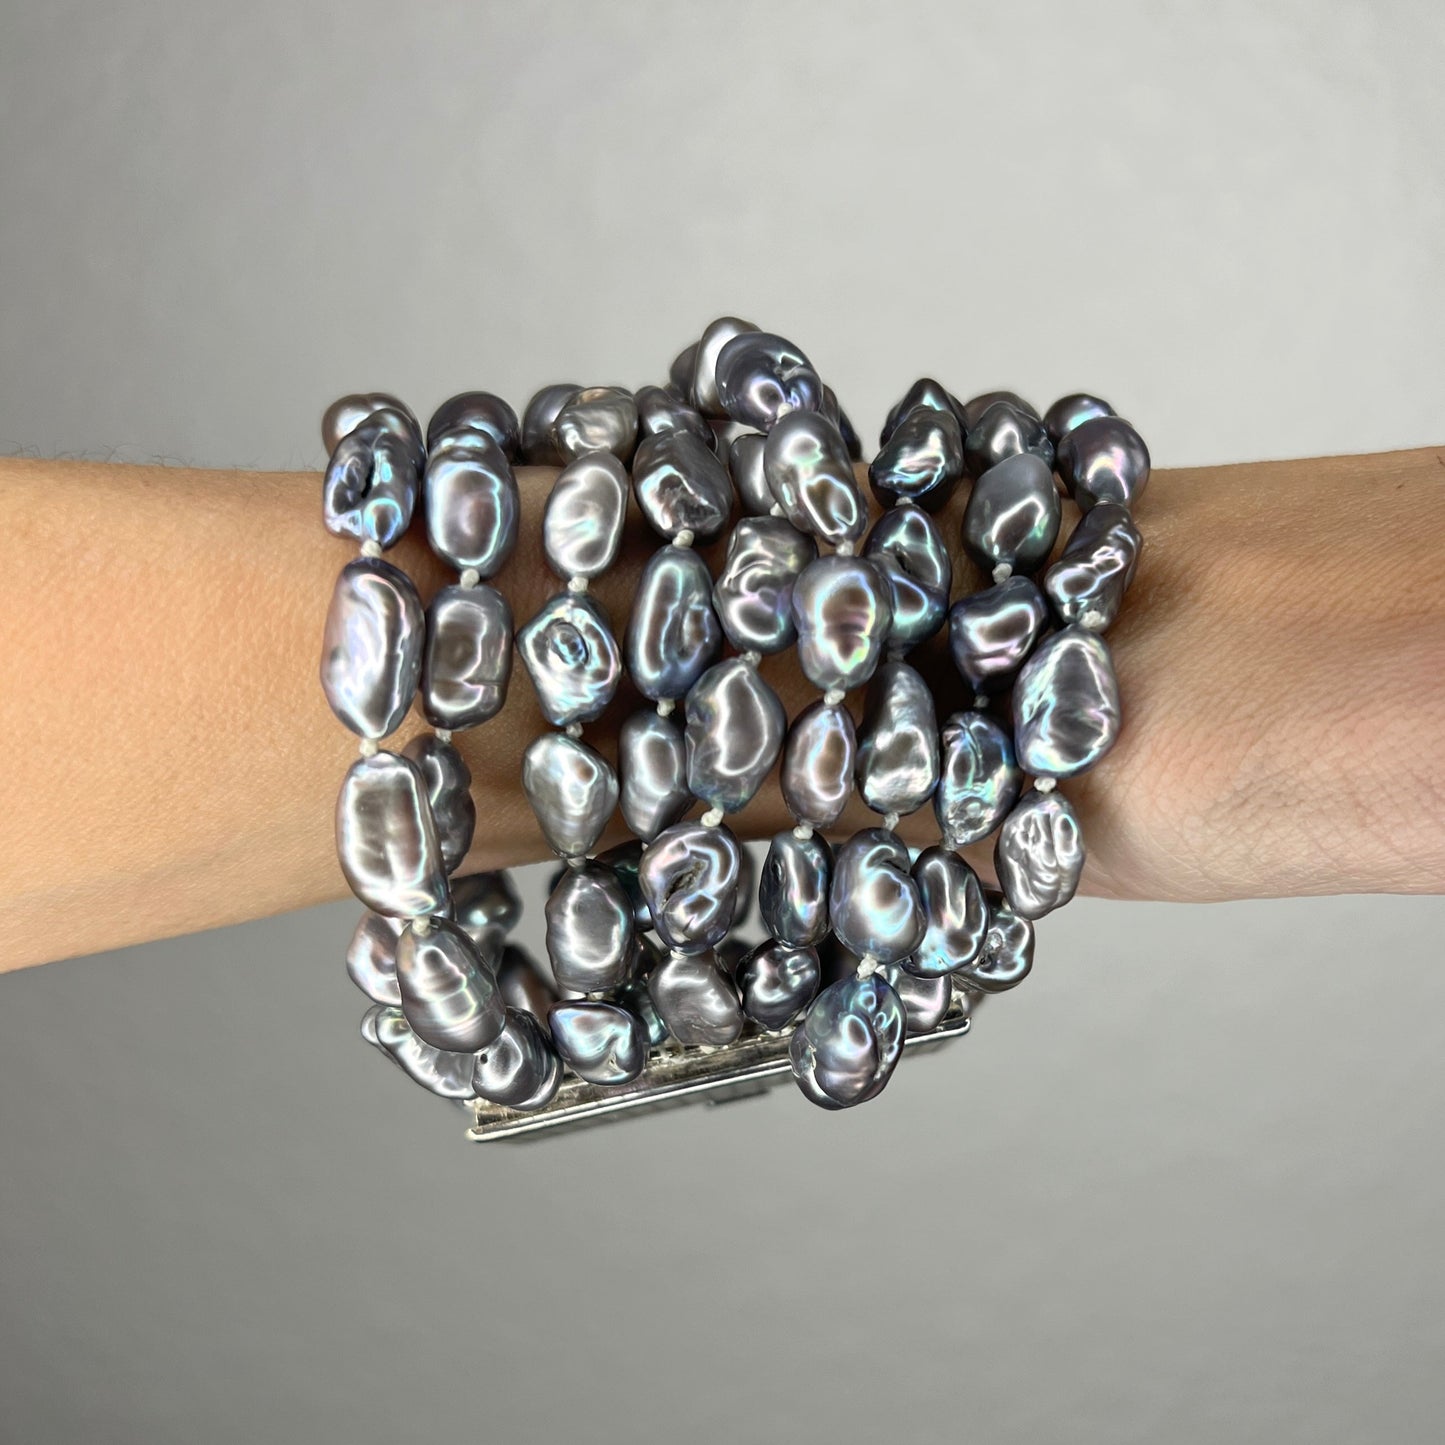 Gray Pearl Multistrand Bracelet